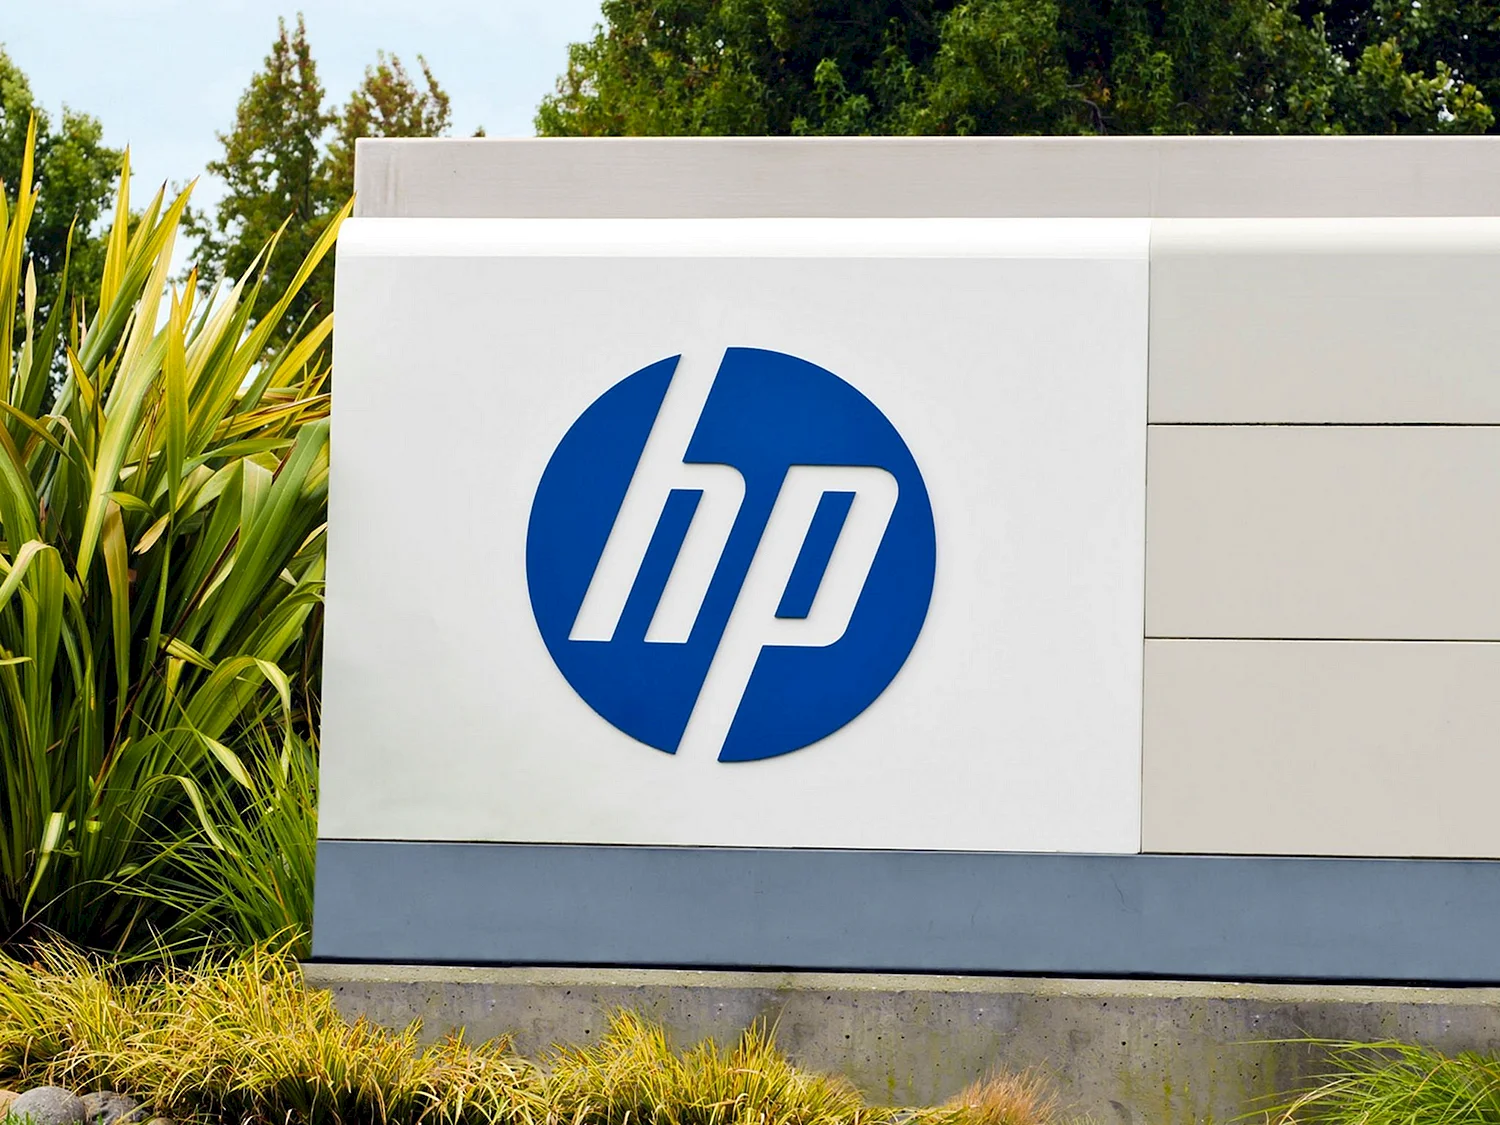 HP Hewlett Packard Company